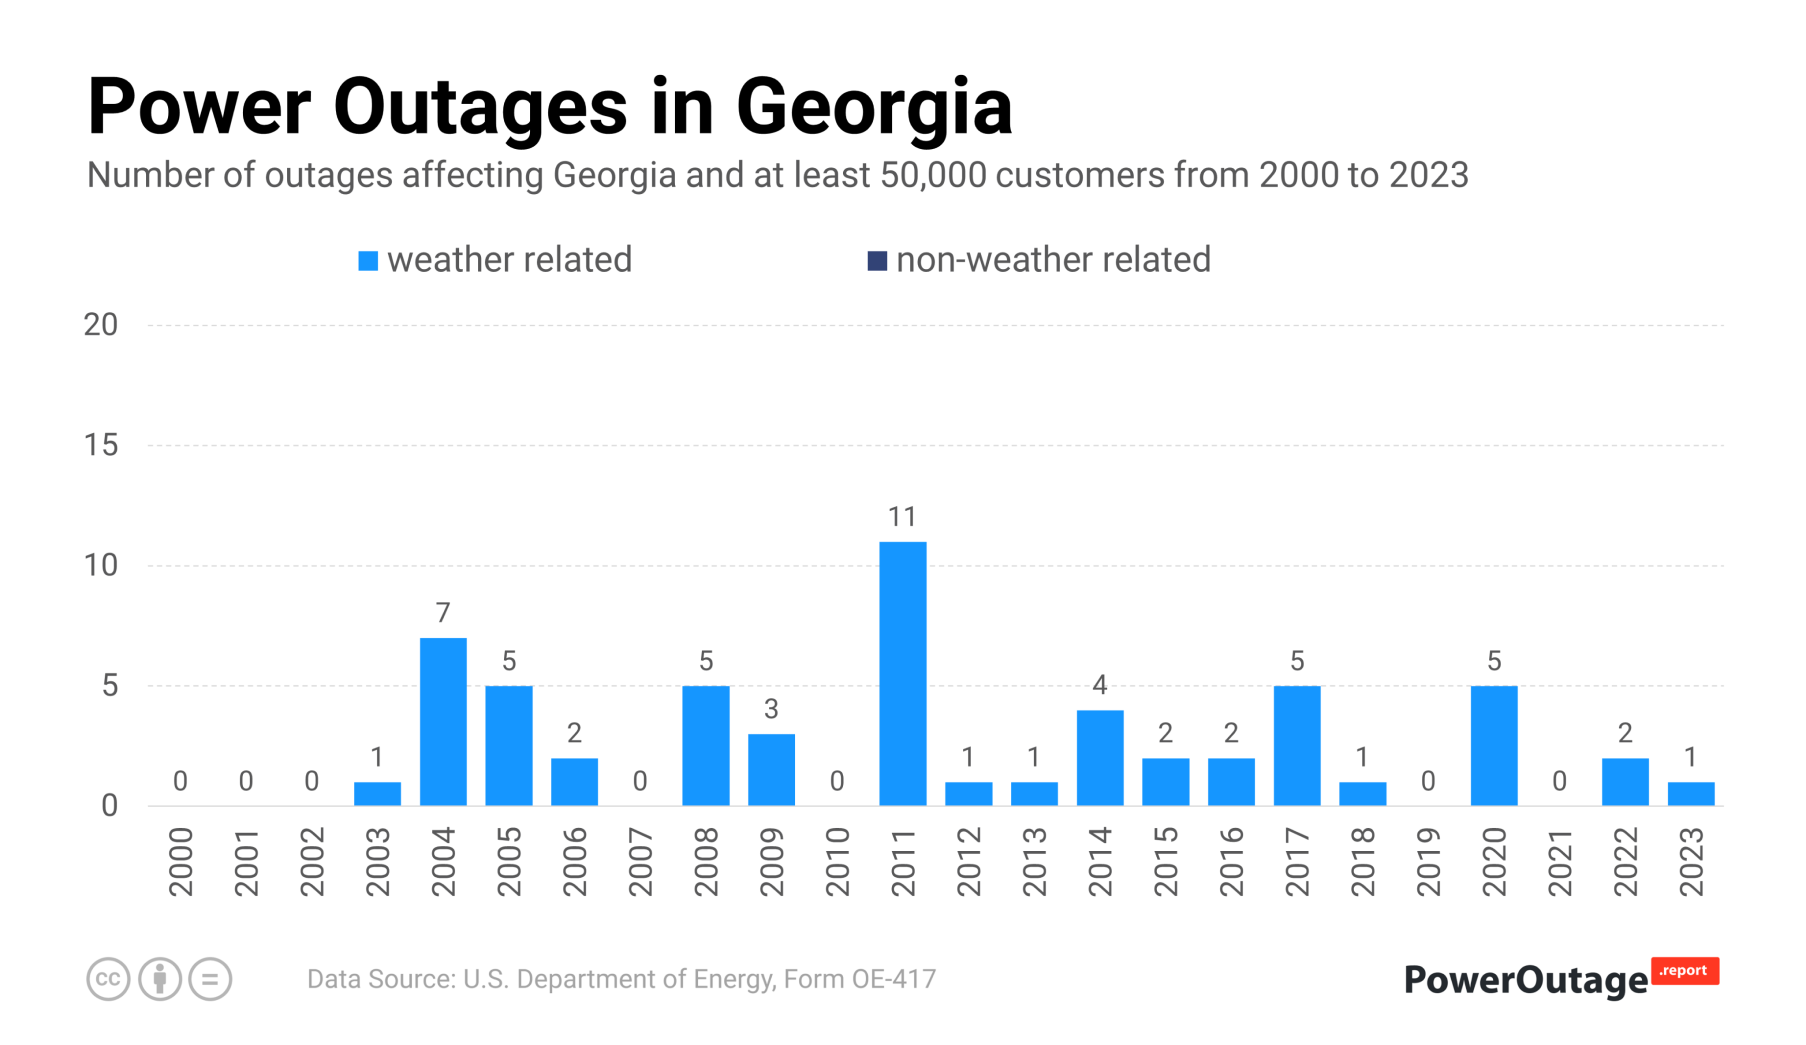 Georgia Power Outage Statistics (2000 - 2021)